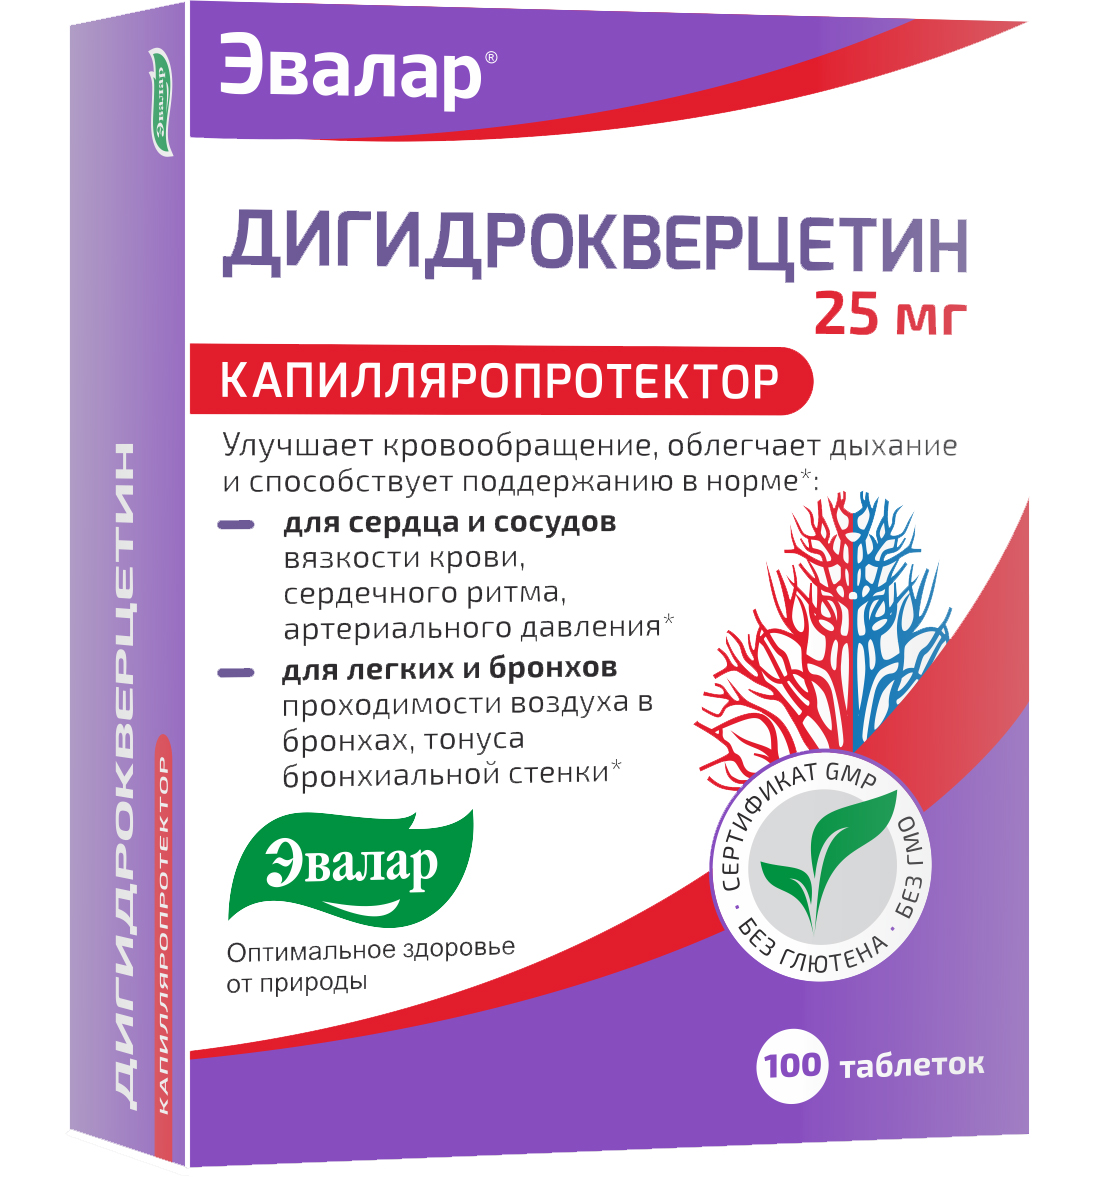 Дигидрокверцетин Эвалар капилляропротектор 25 мг 100 таблеток